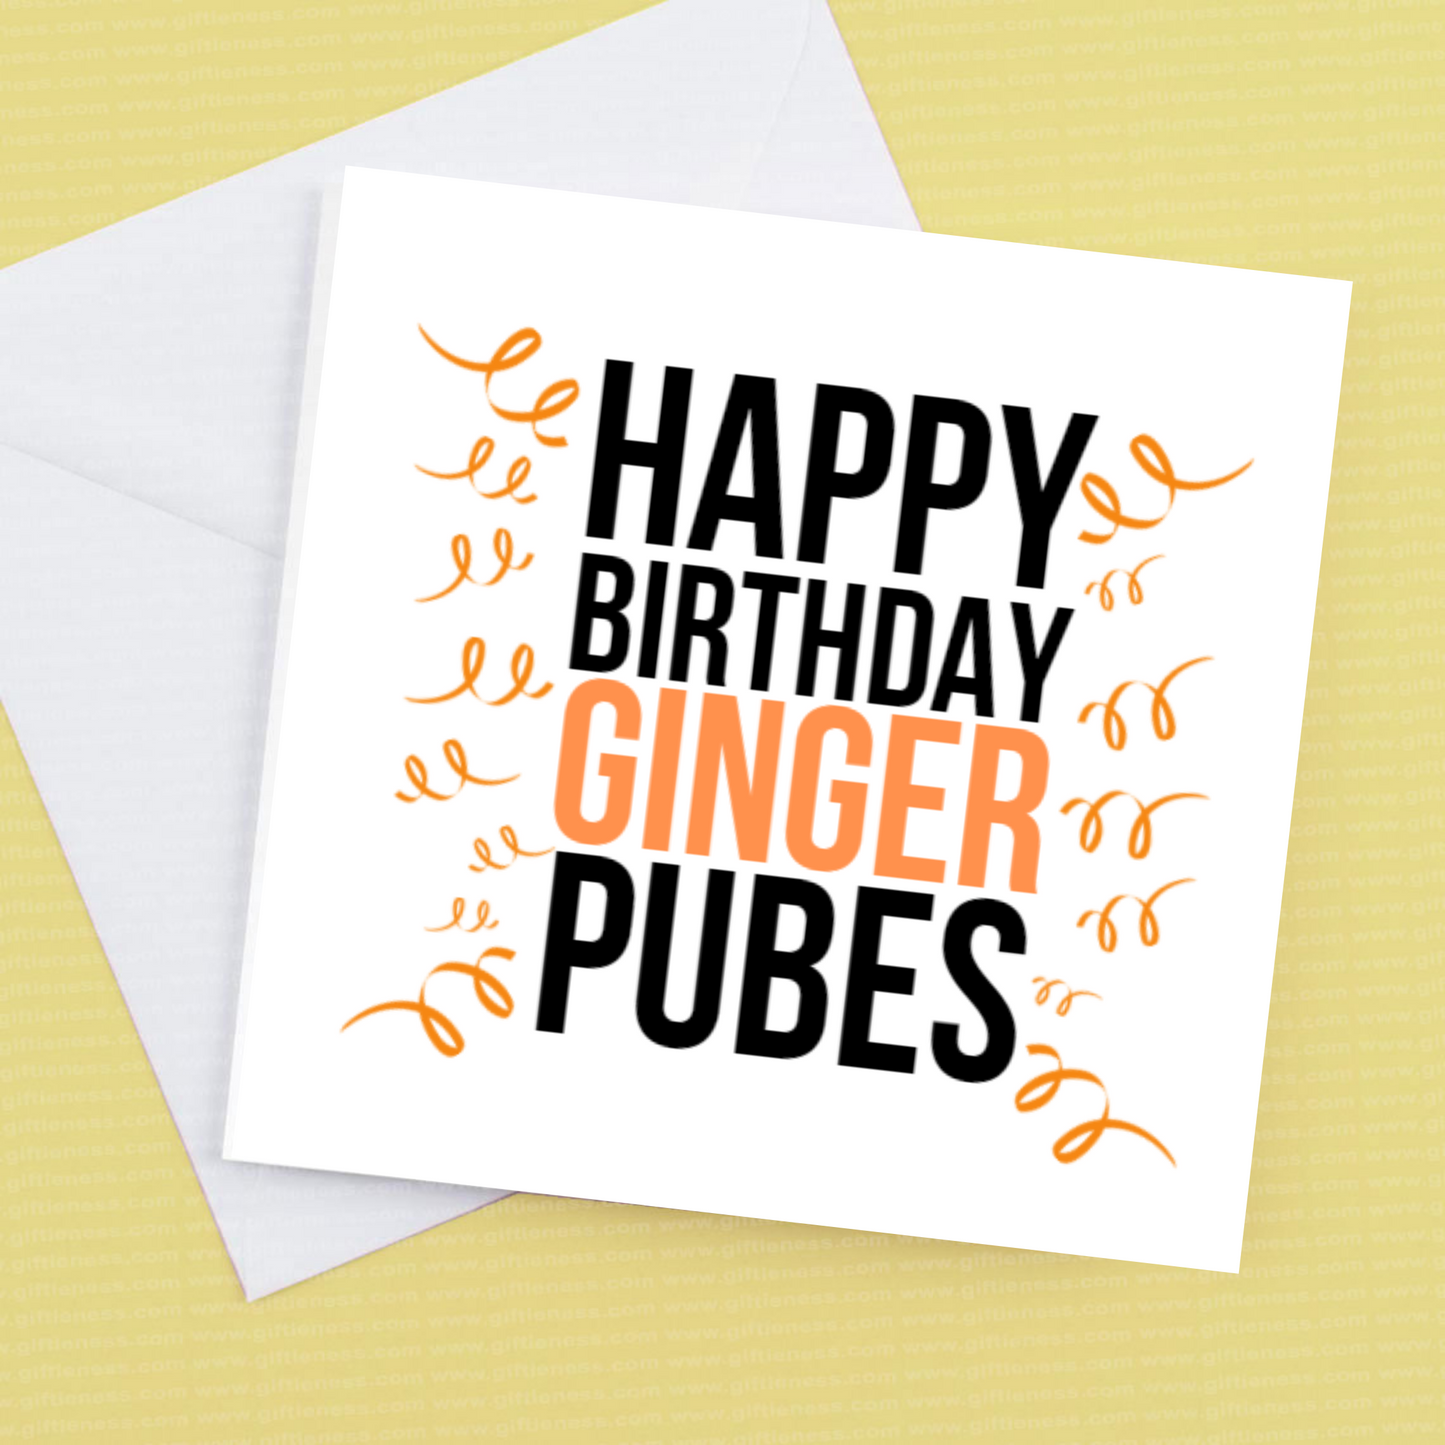 Happy Birthday Ginger Pubes